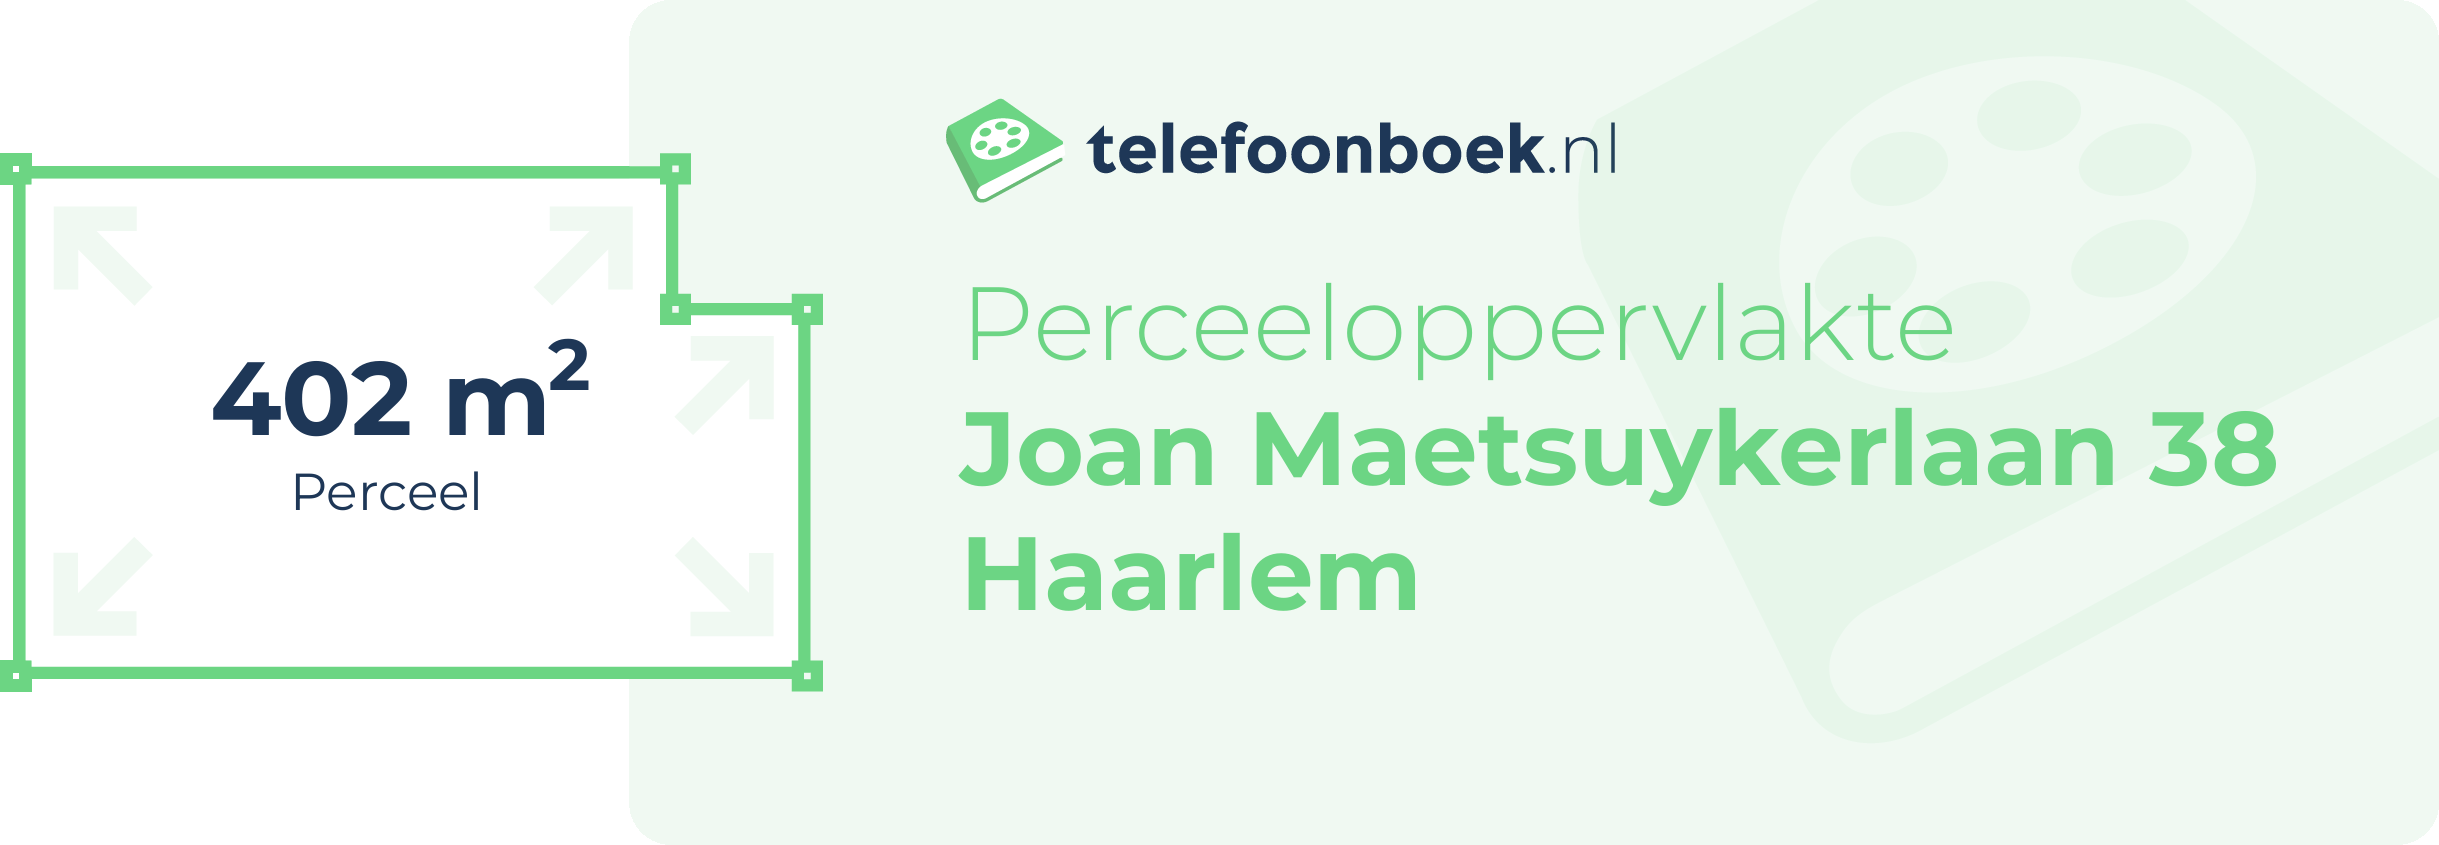 Perceeloppervlakte Joan Maetsuykerlaan 38 Haarlem